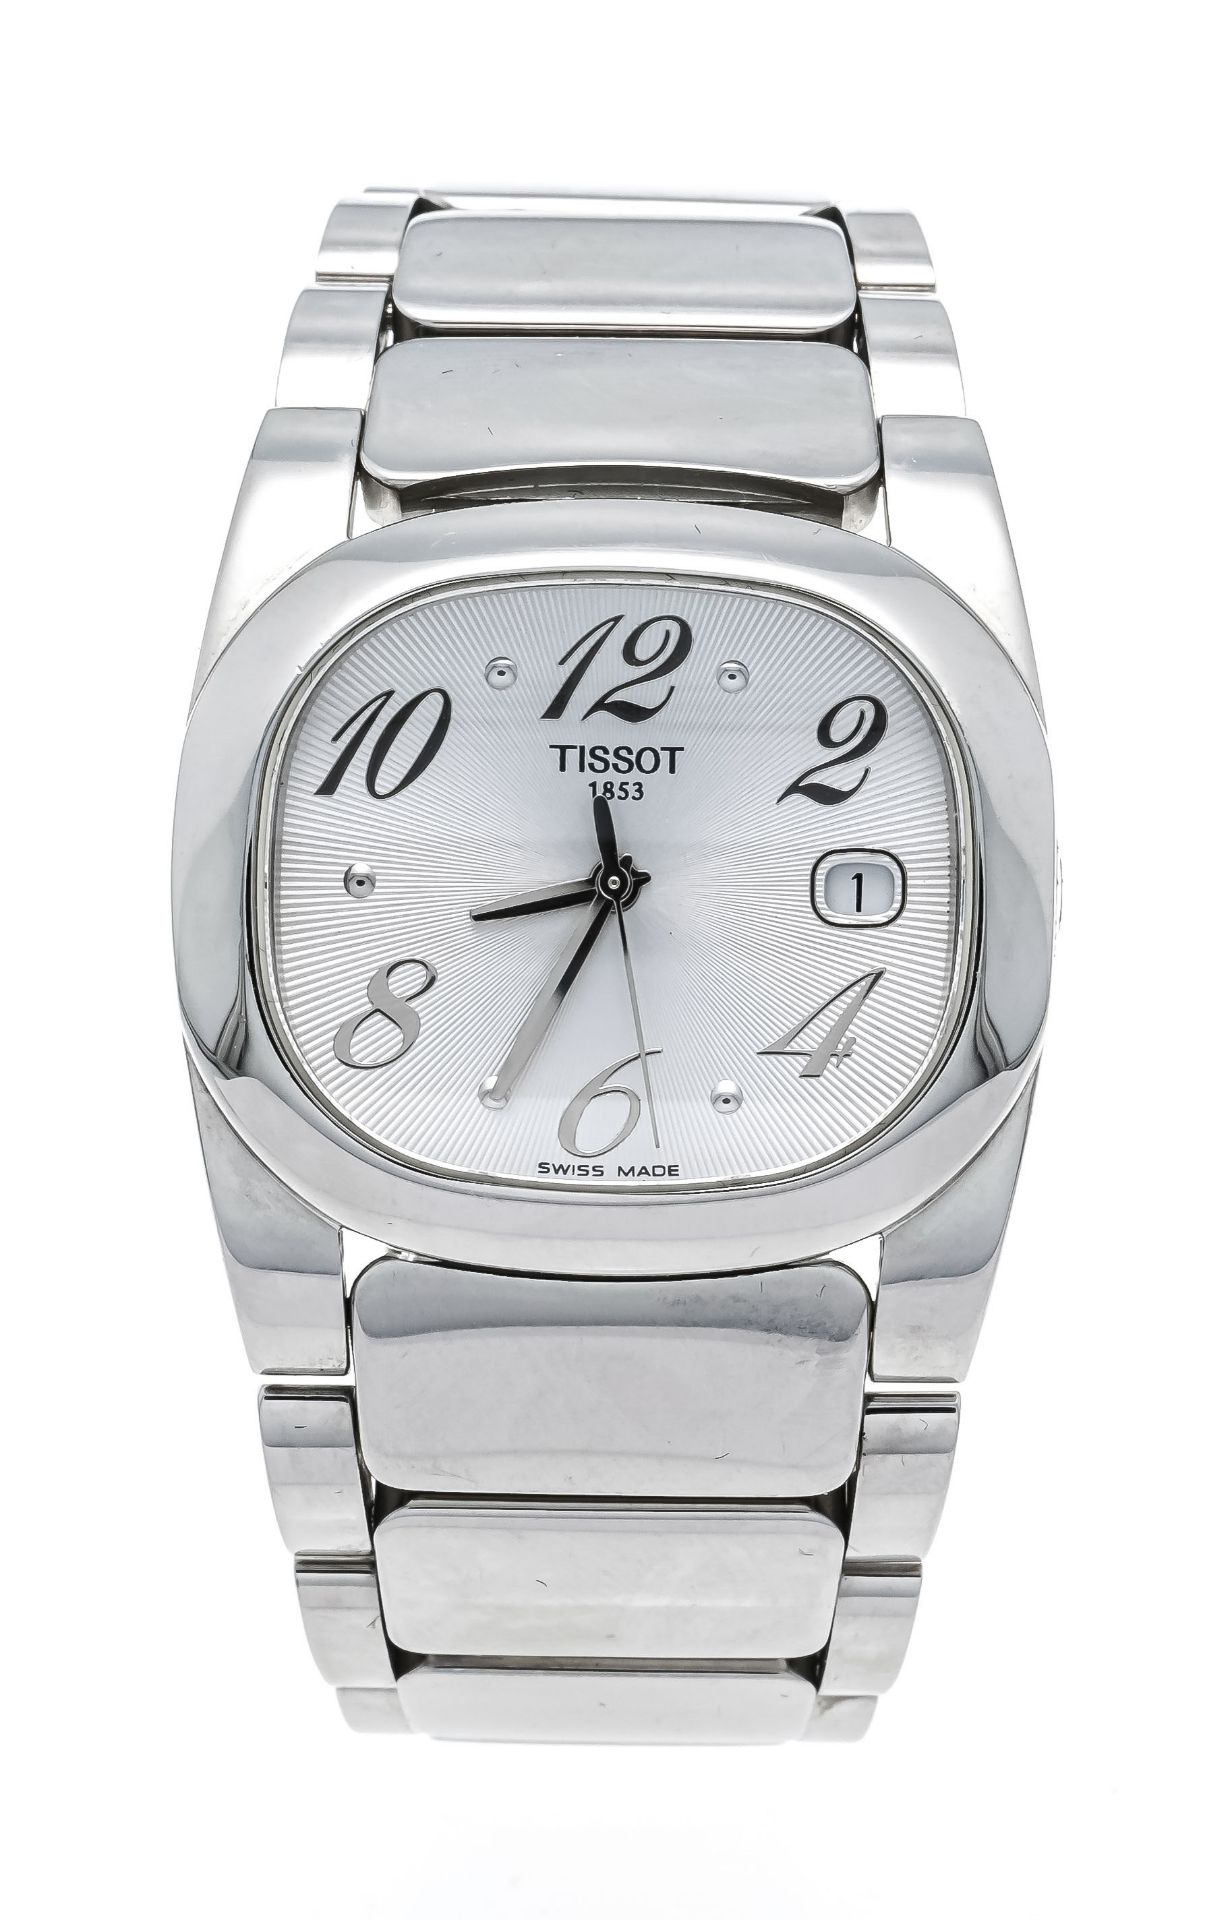 Tissot ladies' quartz watch, steel, ref. T009310 A, T-Moments, circa 2015, silver-colored dial